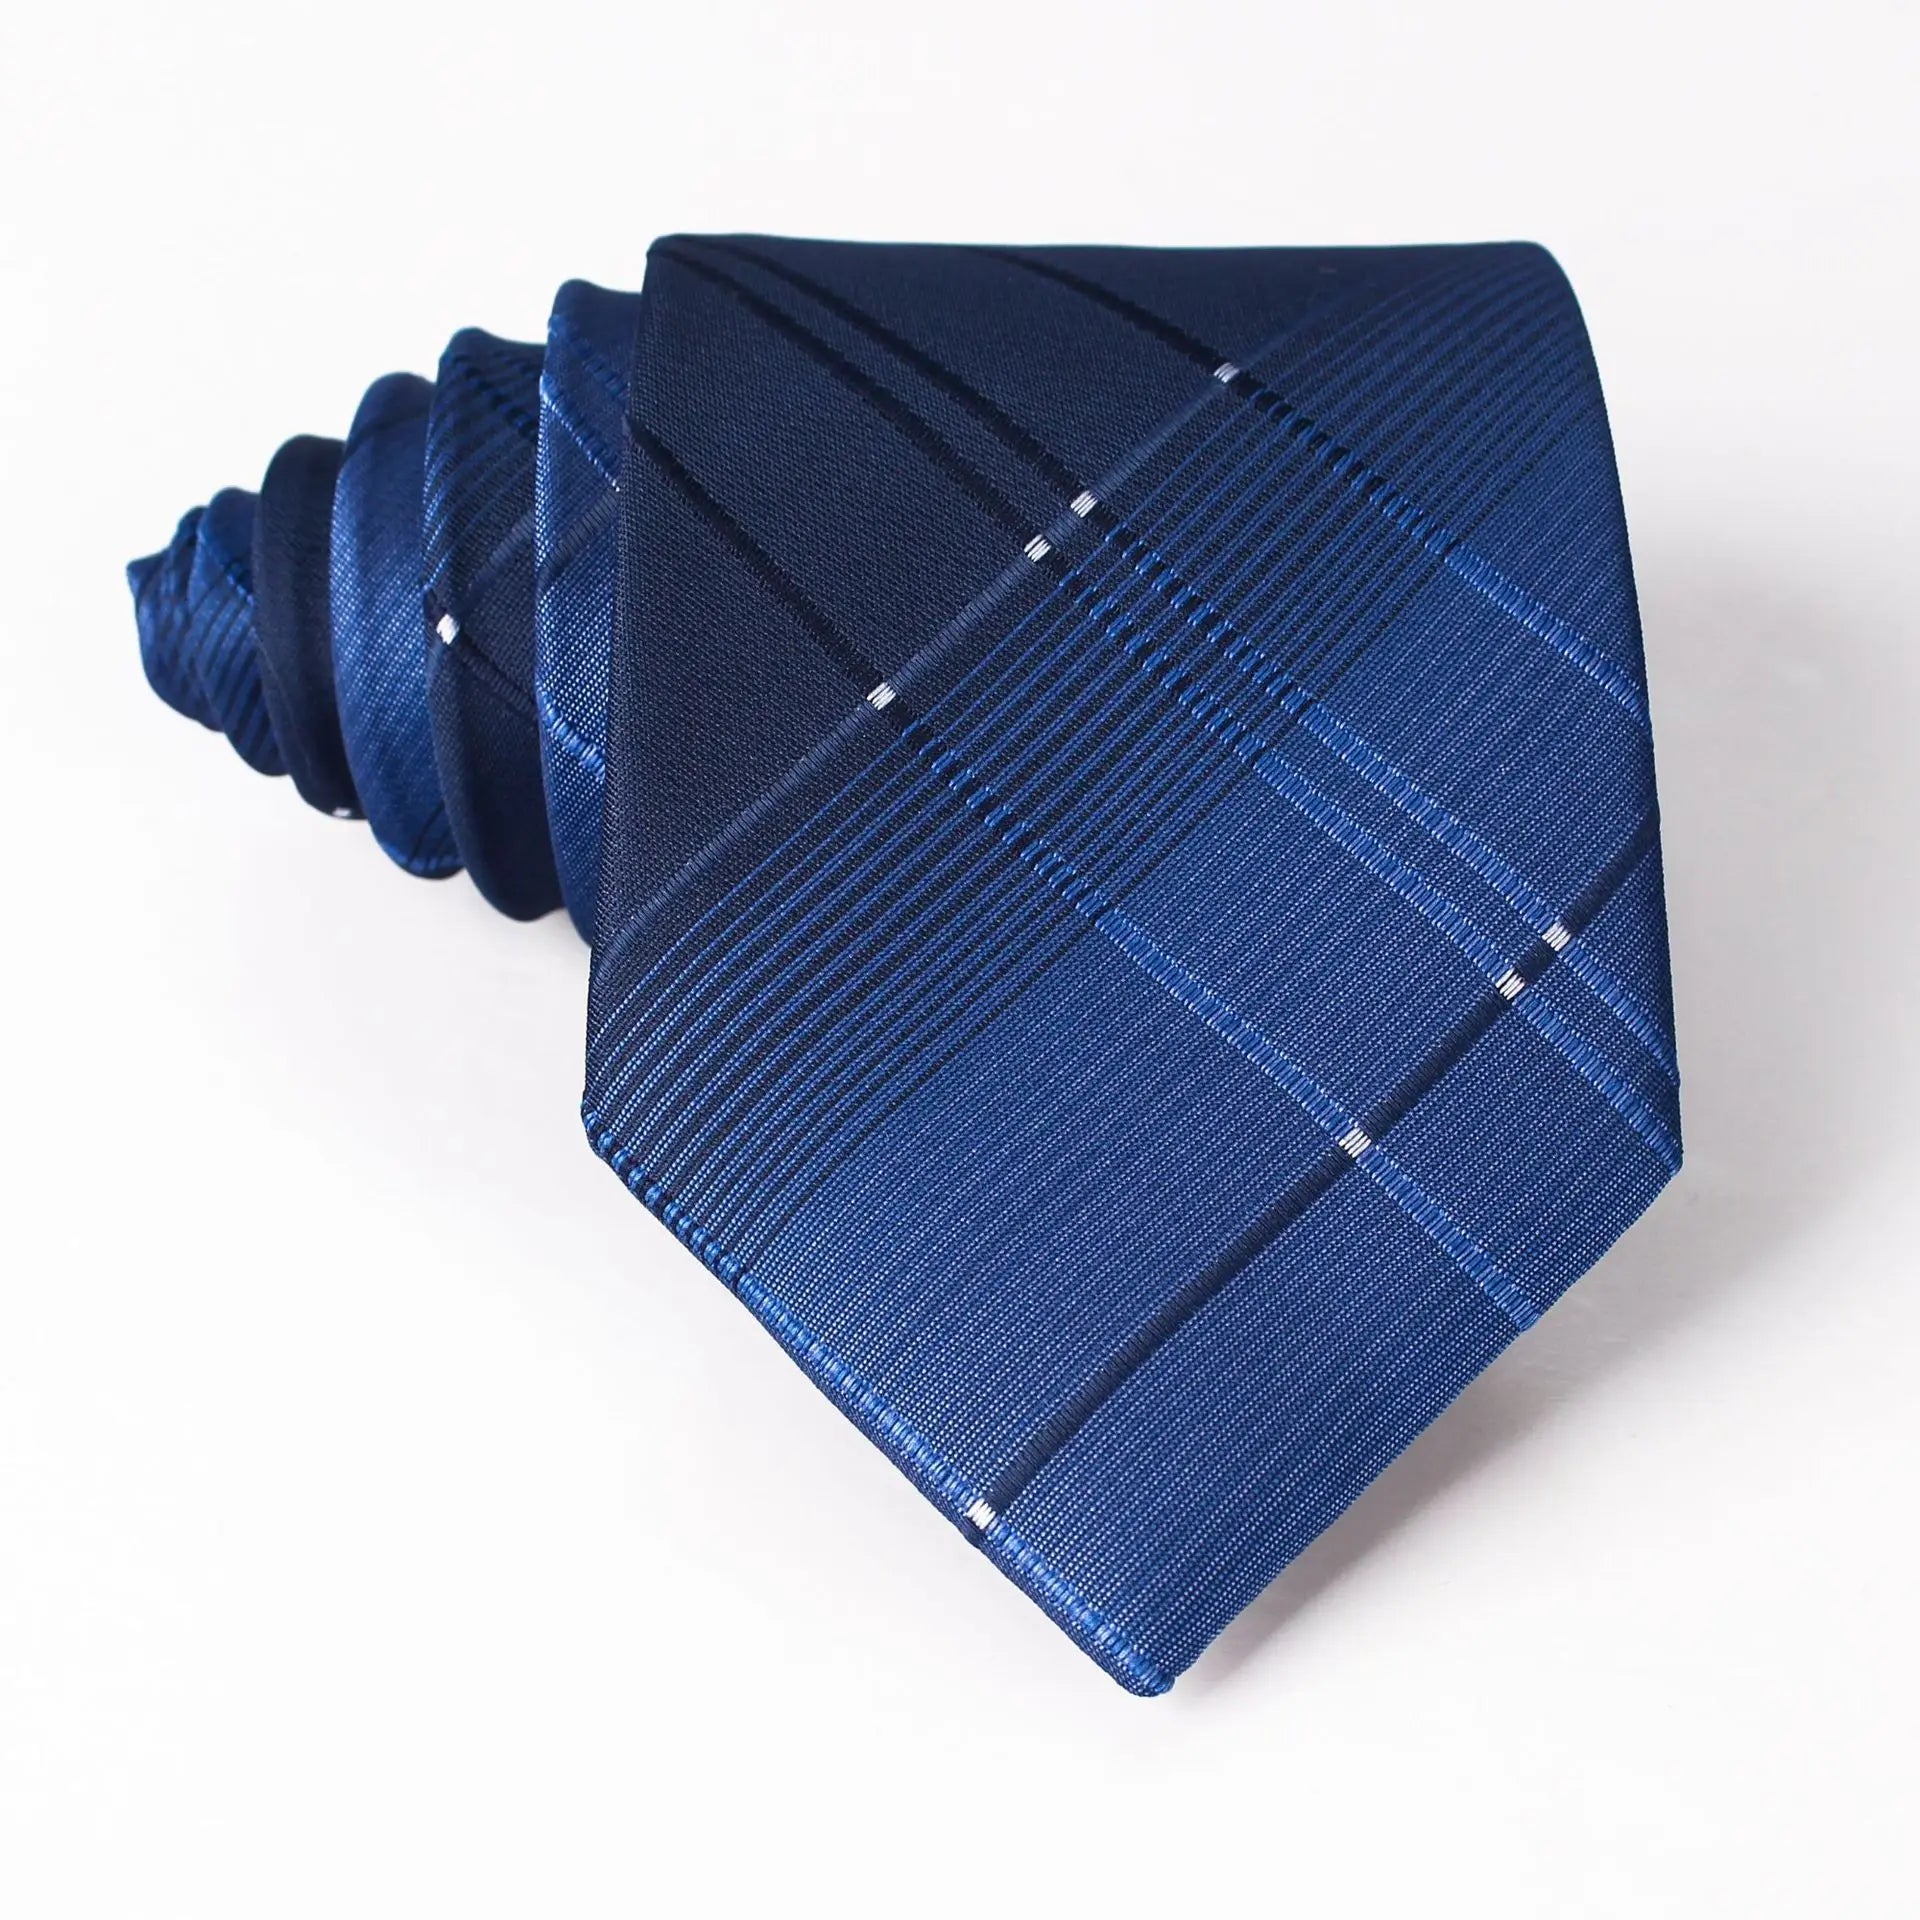 Blue with light cross lines tie 8cm